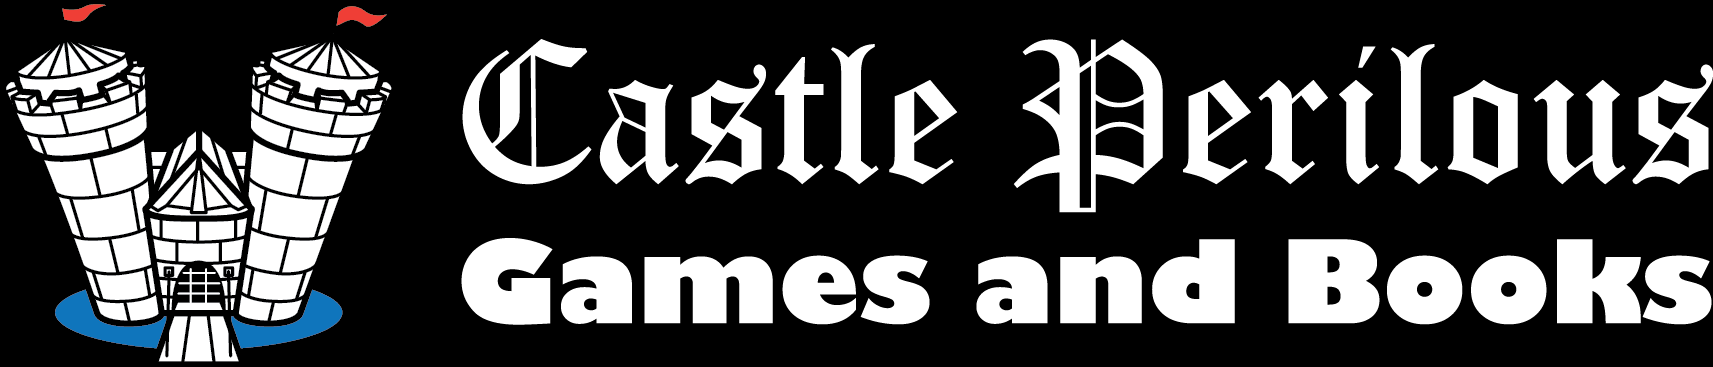 castleperilous logo